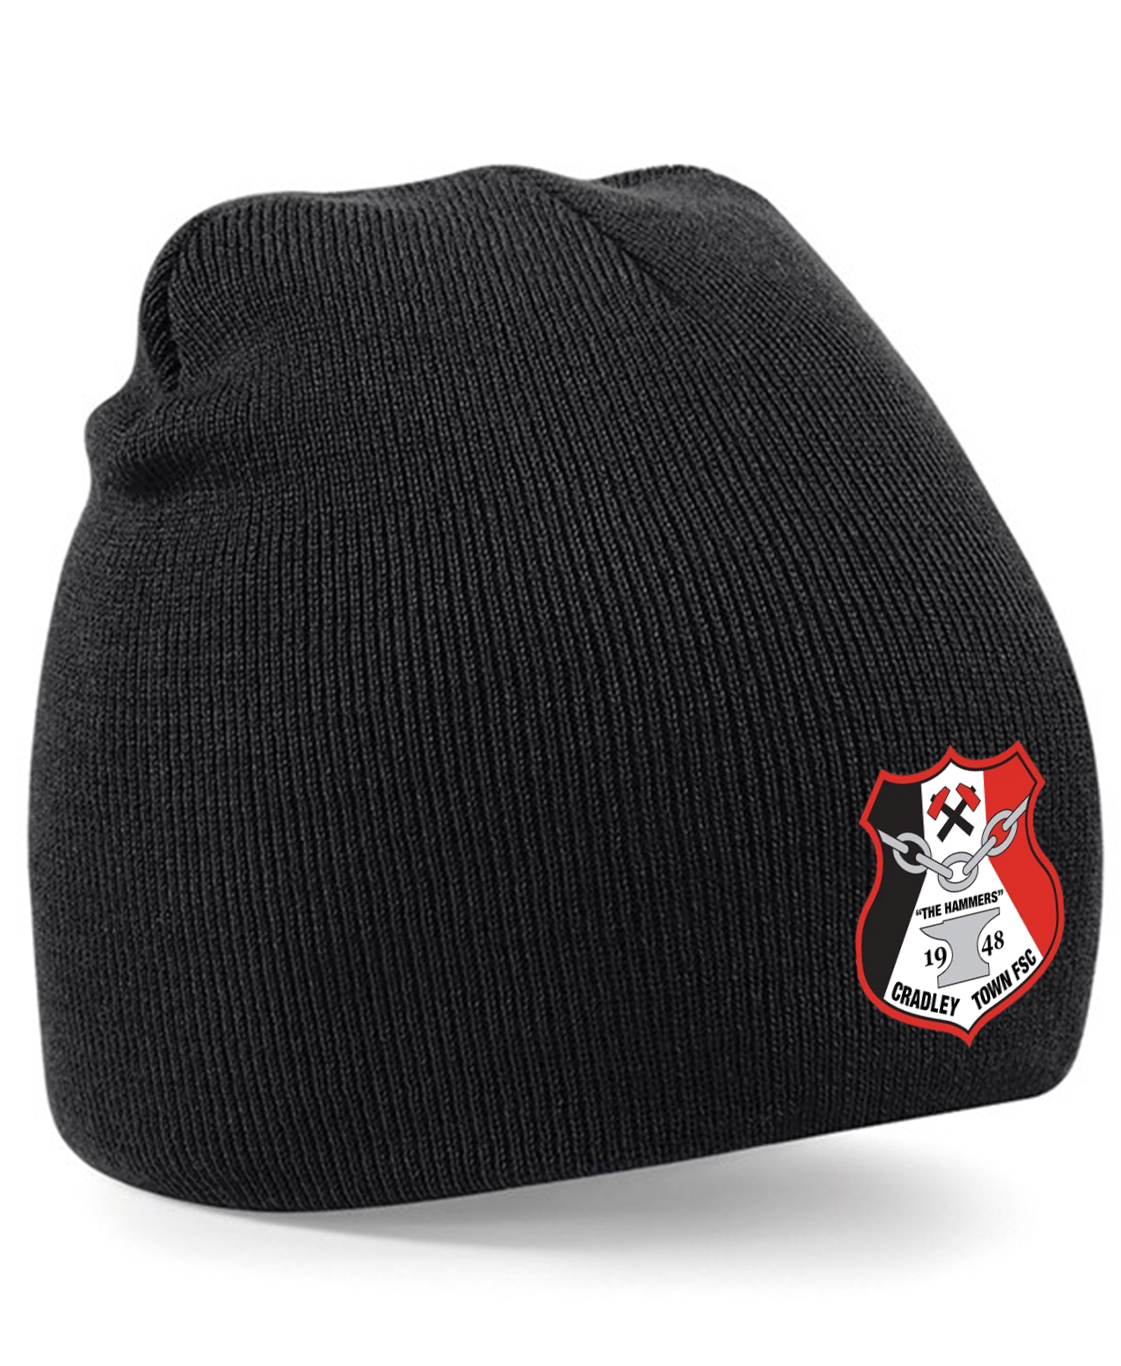 Cradley Town FC Beanie Hats